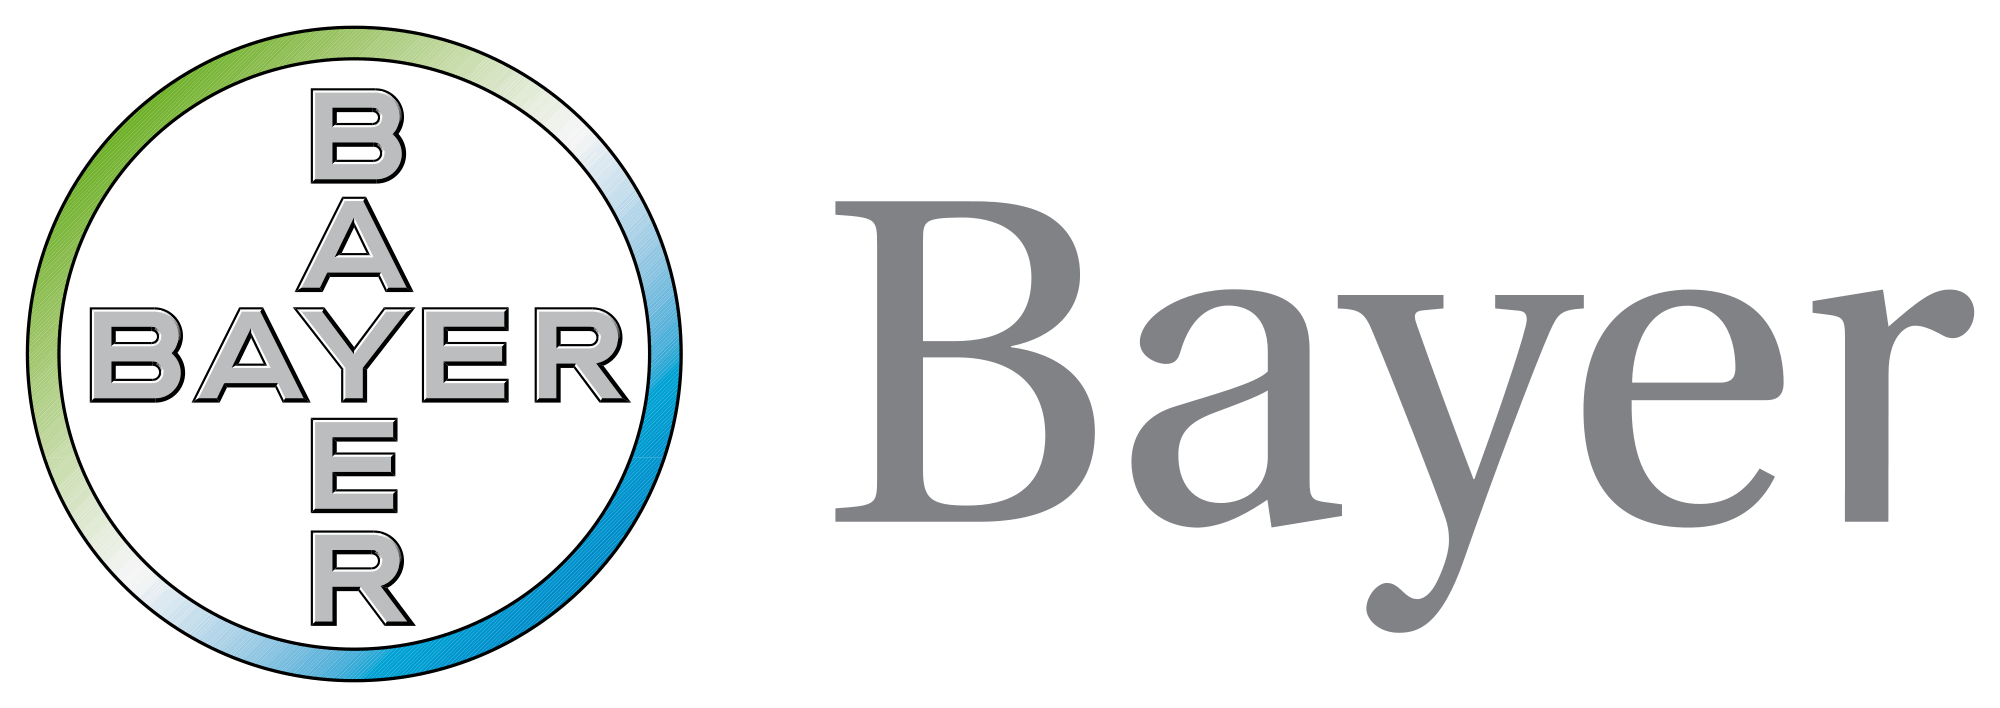 New Bayer Logo - Engineering Companies